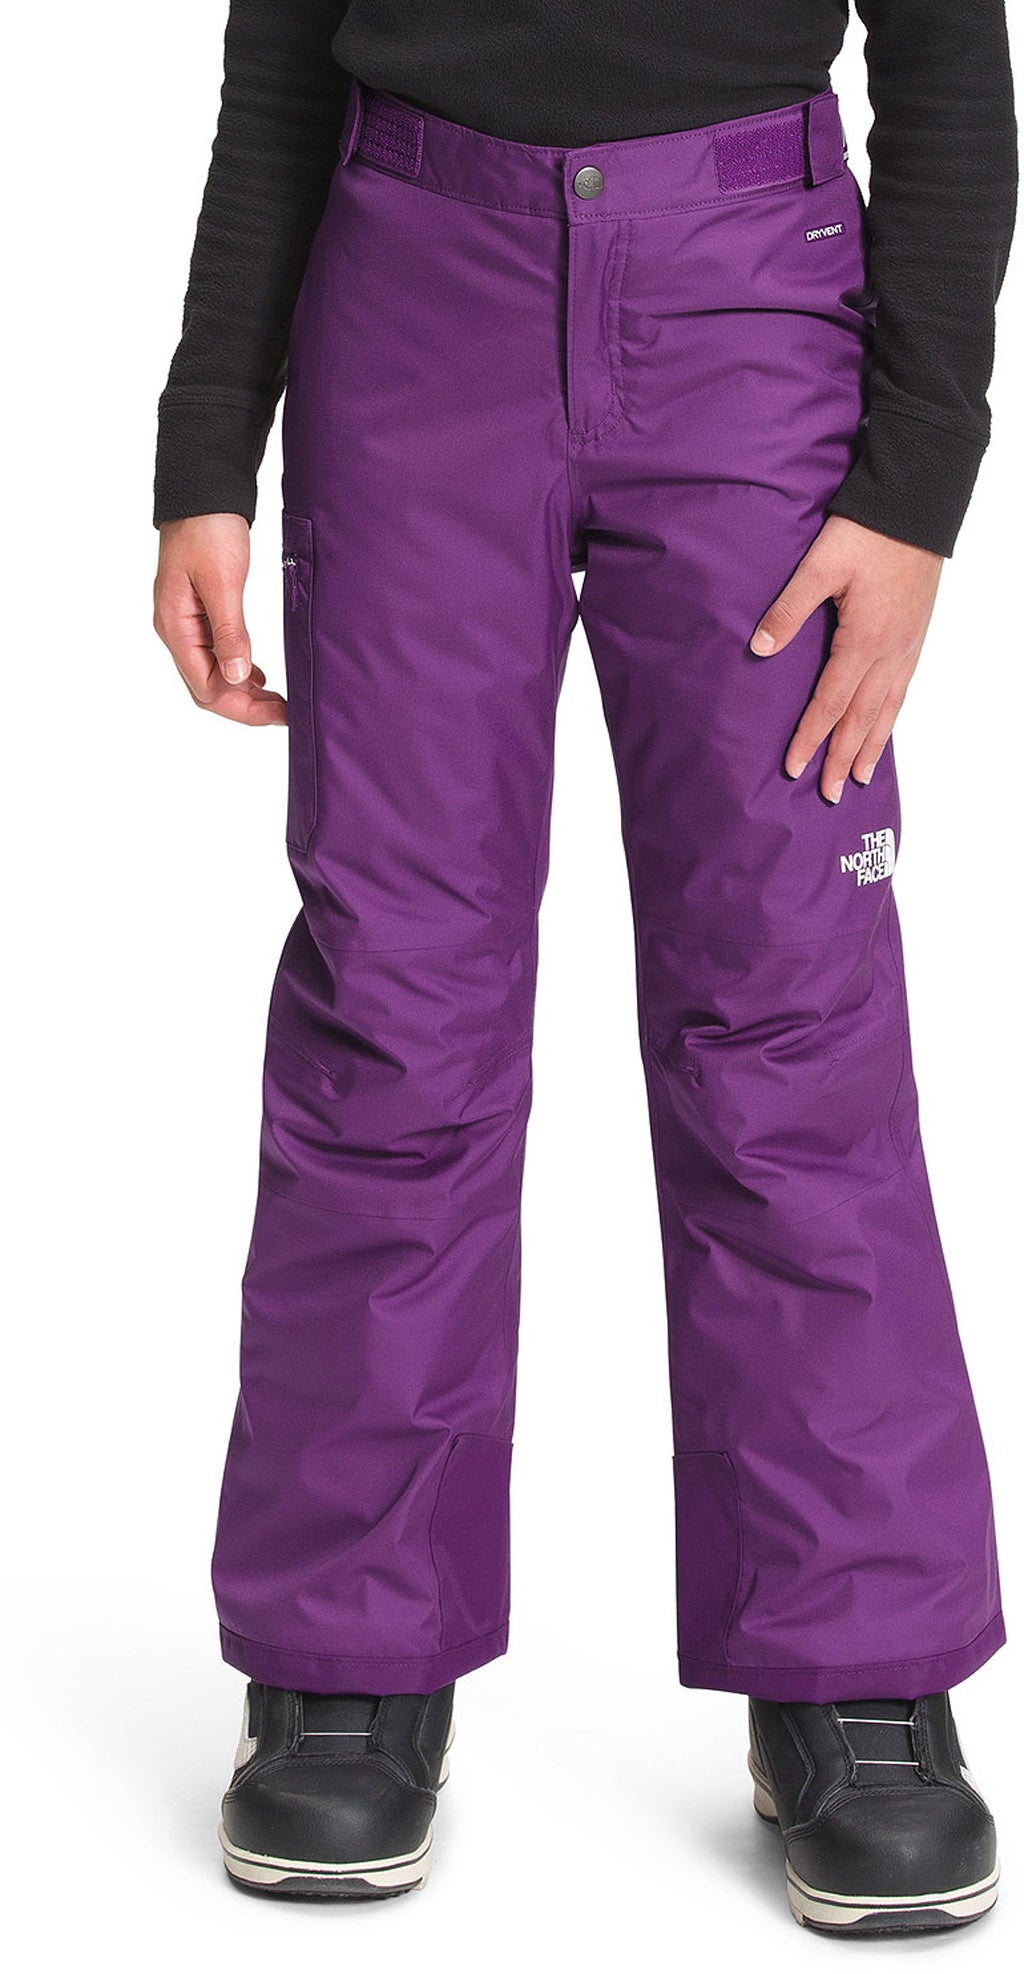 NORTHFACE Freedom Ski Pants - Girls